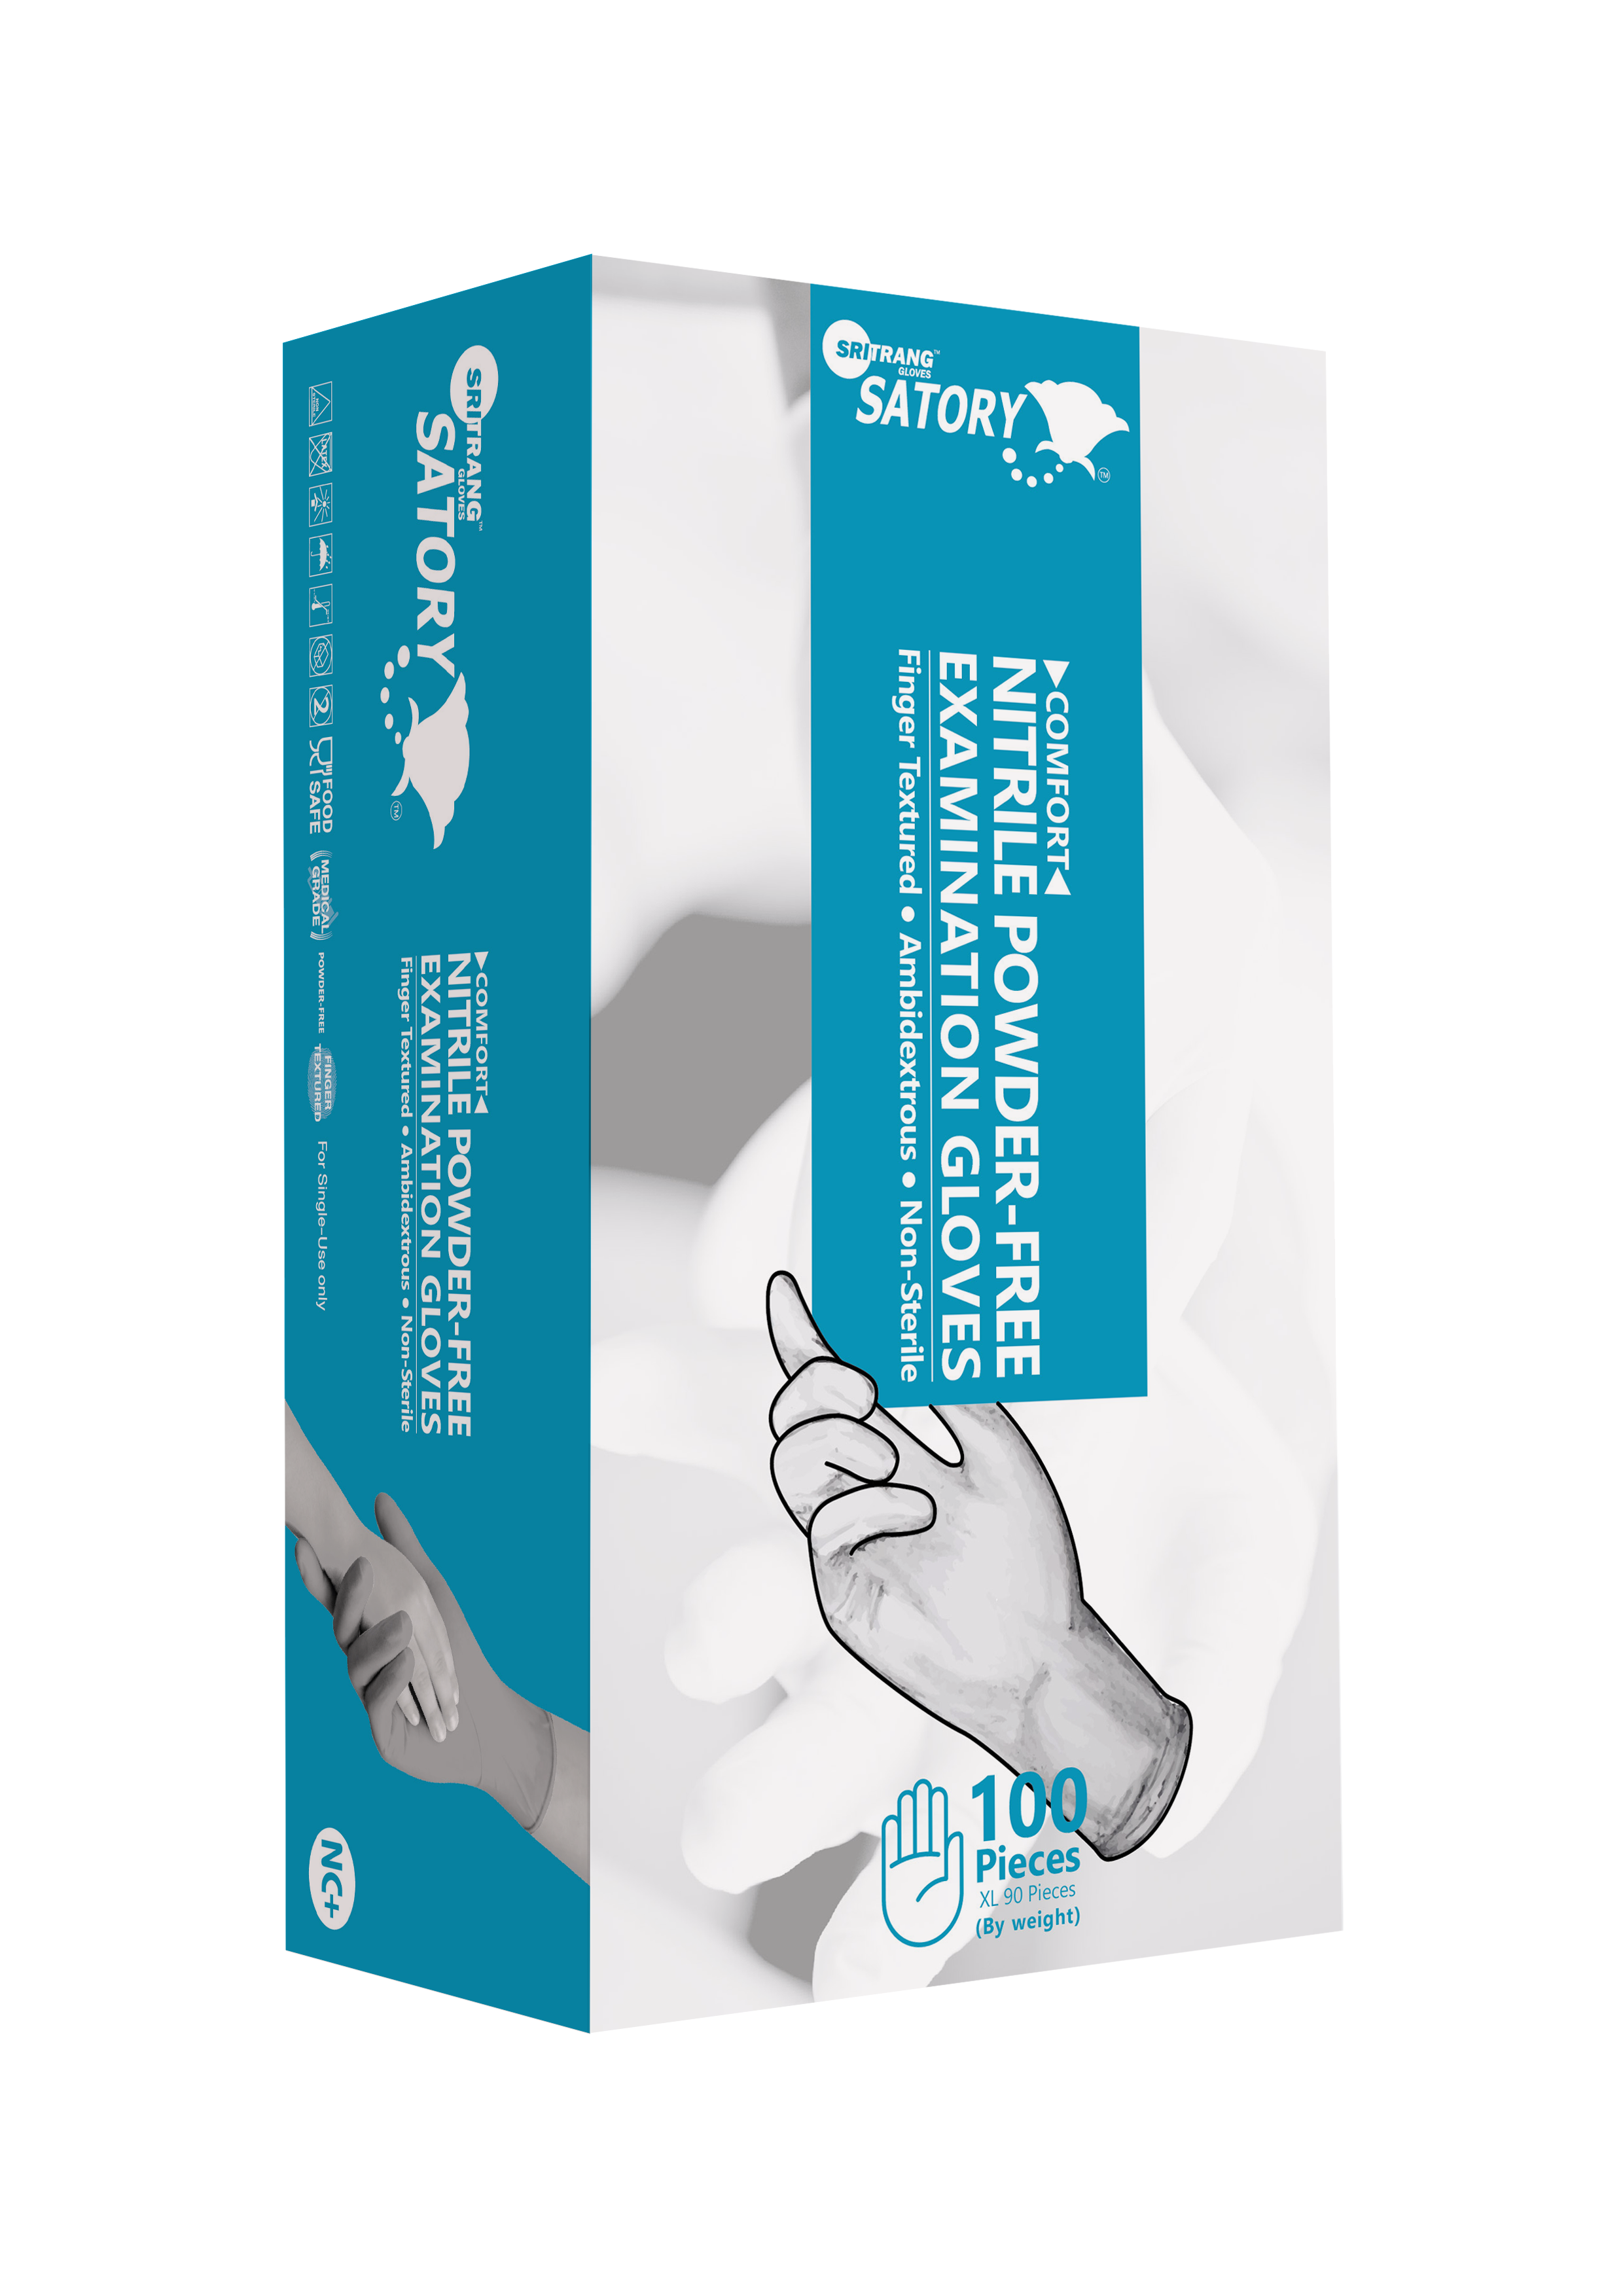 Satory Comfort Nitrile Powder-free Examination Gloves (Dark Ocean Blue)